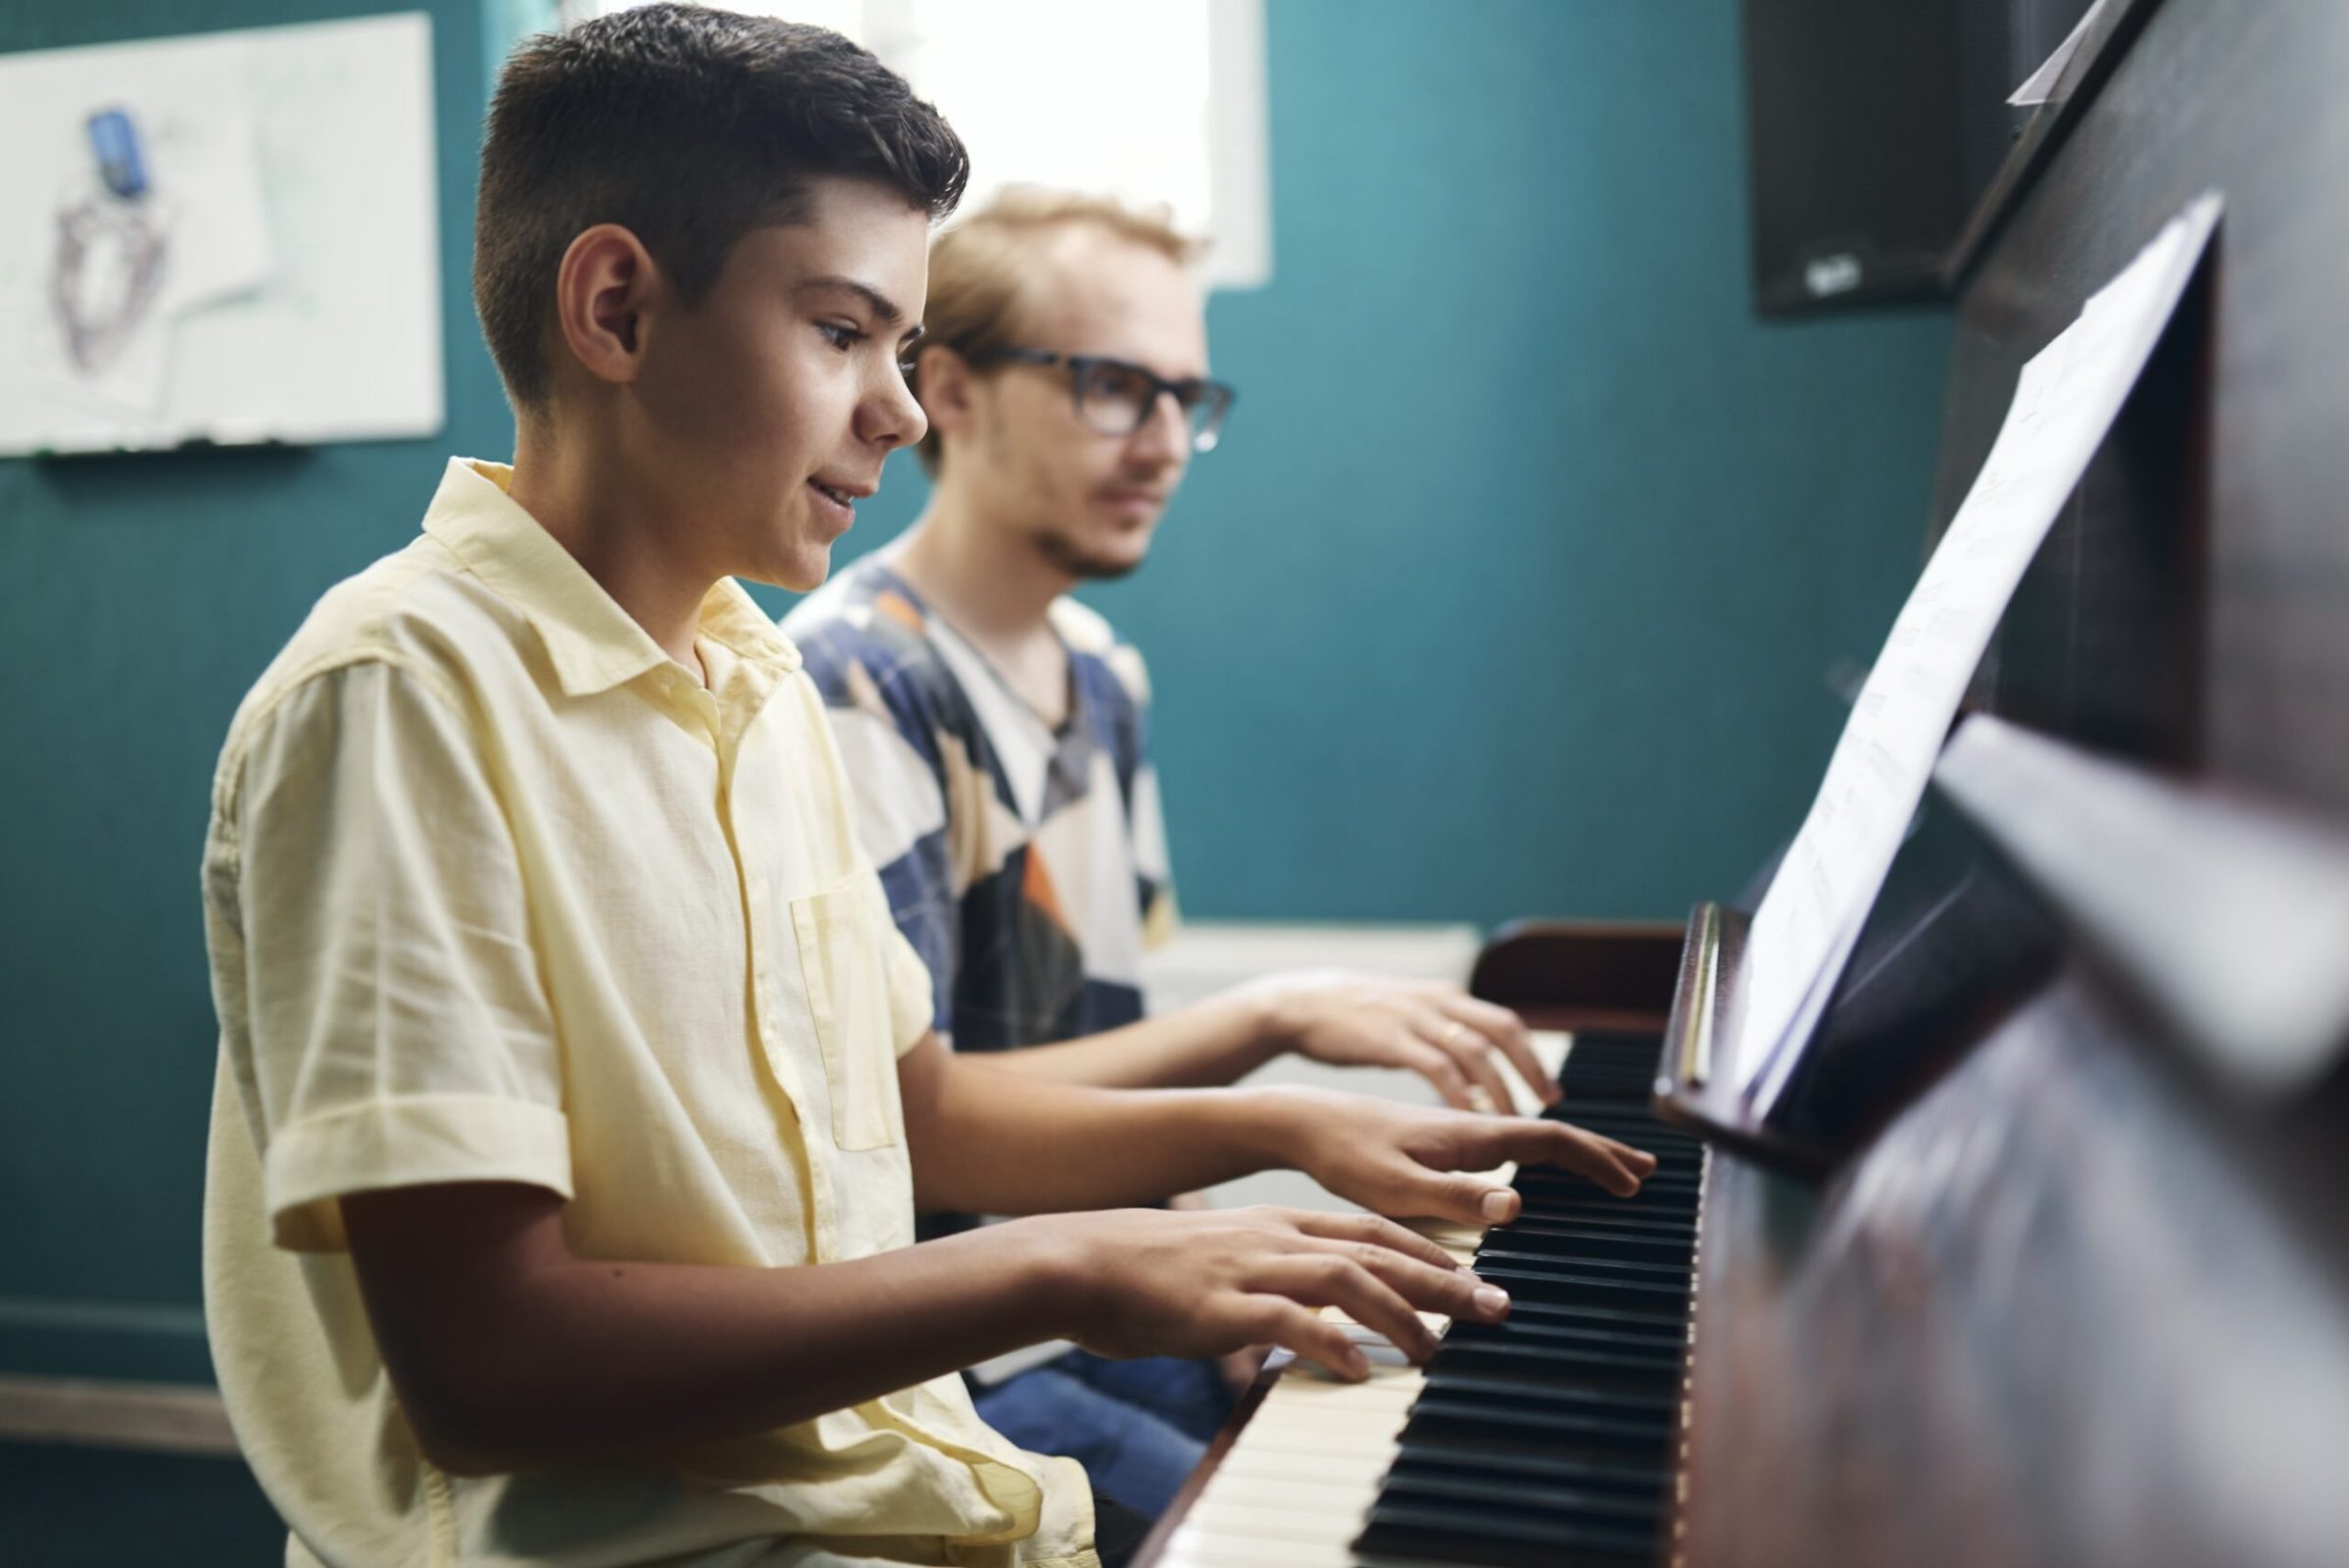 smiling-boy-playing-the-piano-with-his-teacher-2021-09-24-04-29-00-utc.jpg